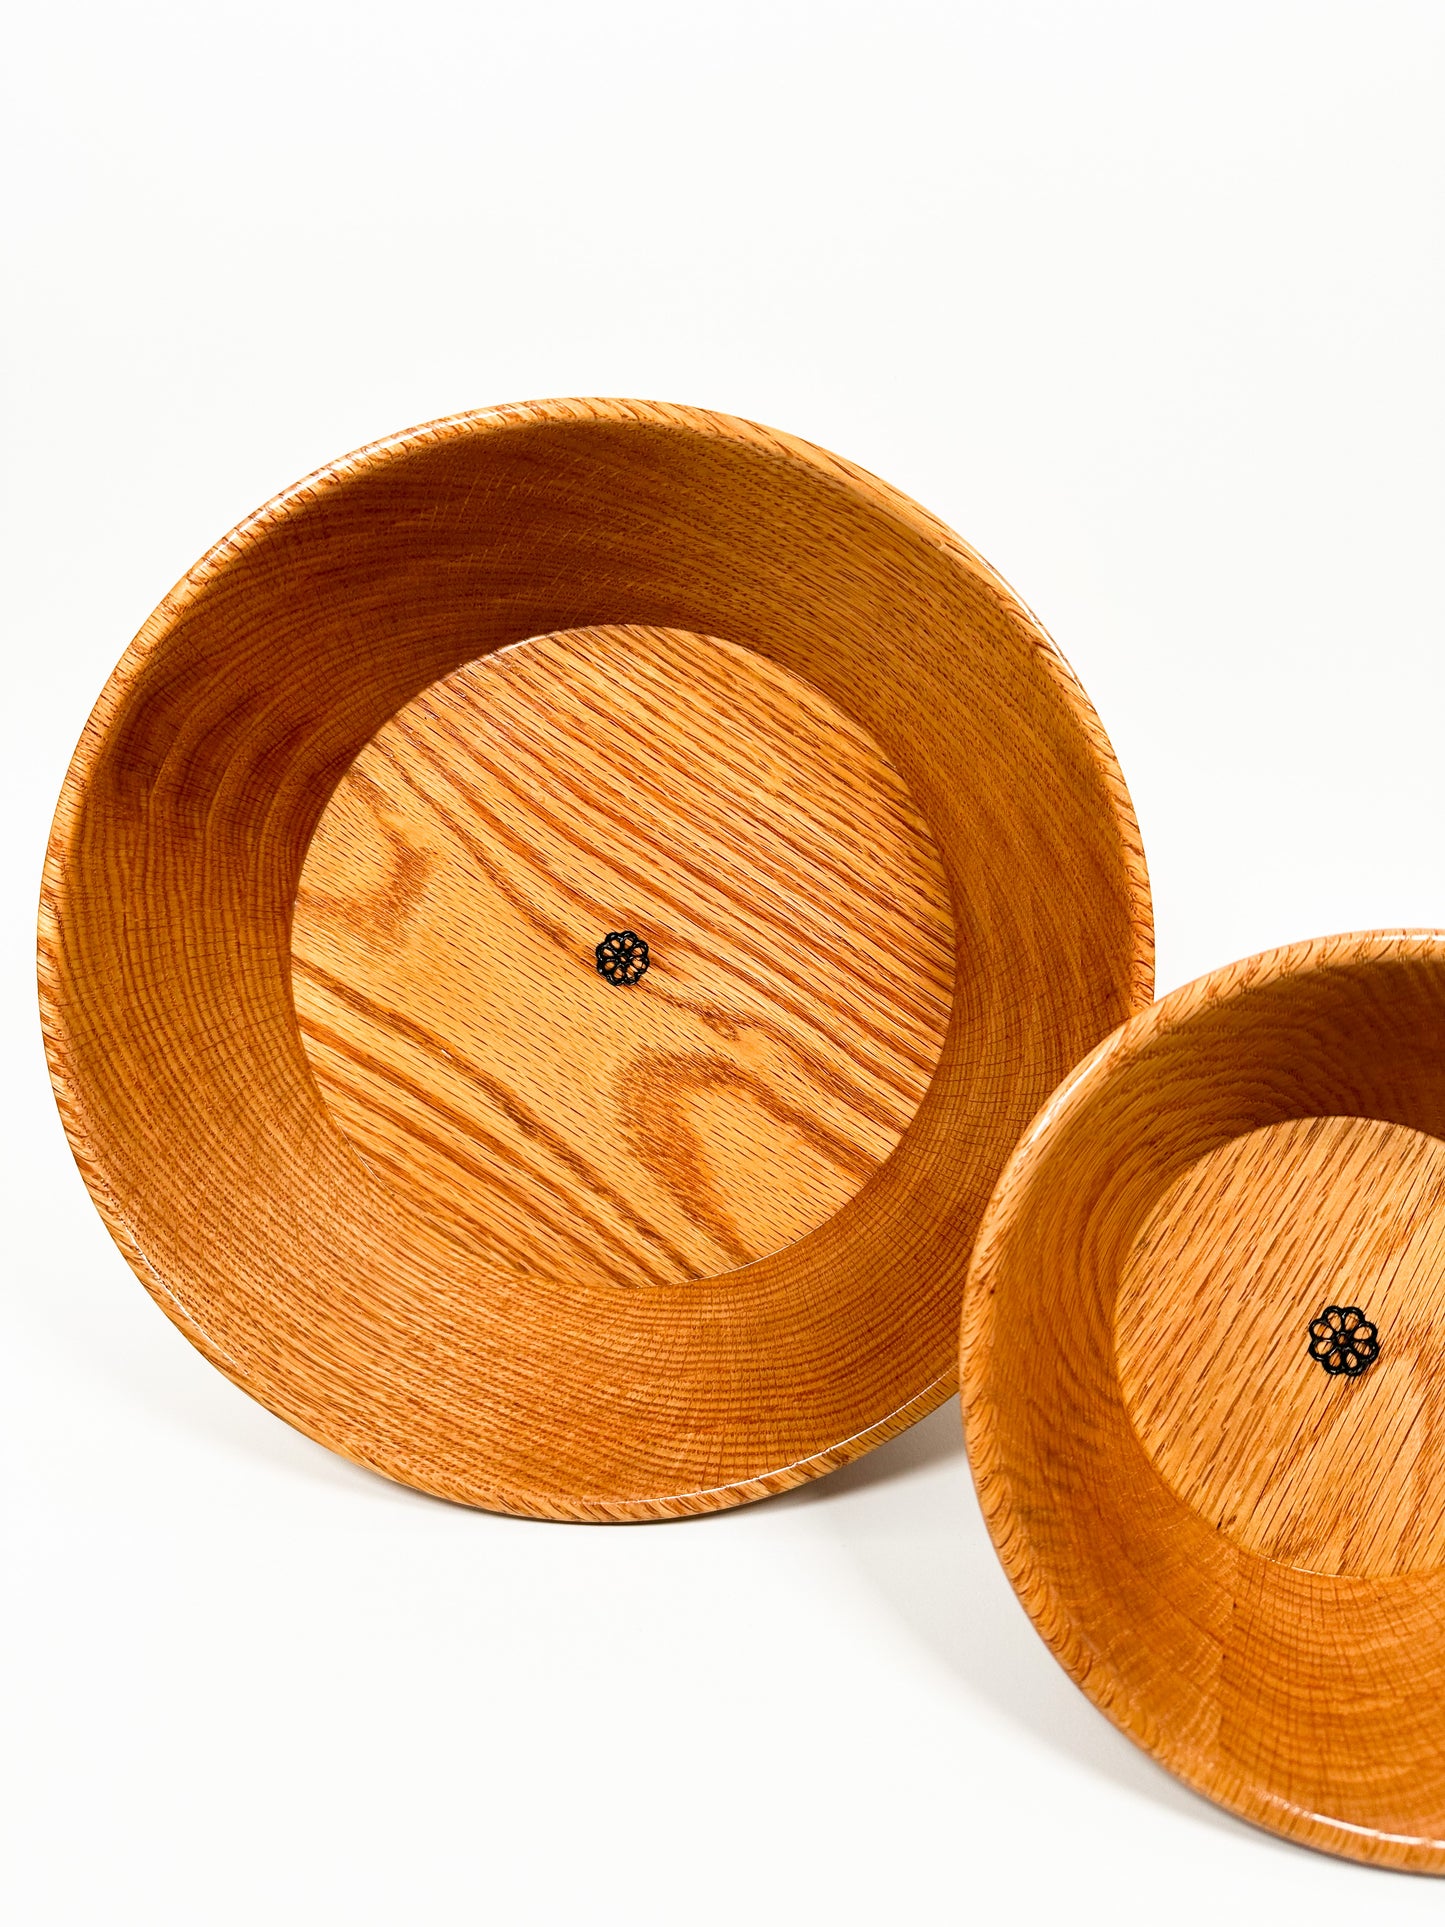 Handmade Red Oak Bowl Set